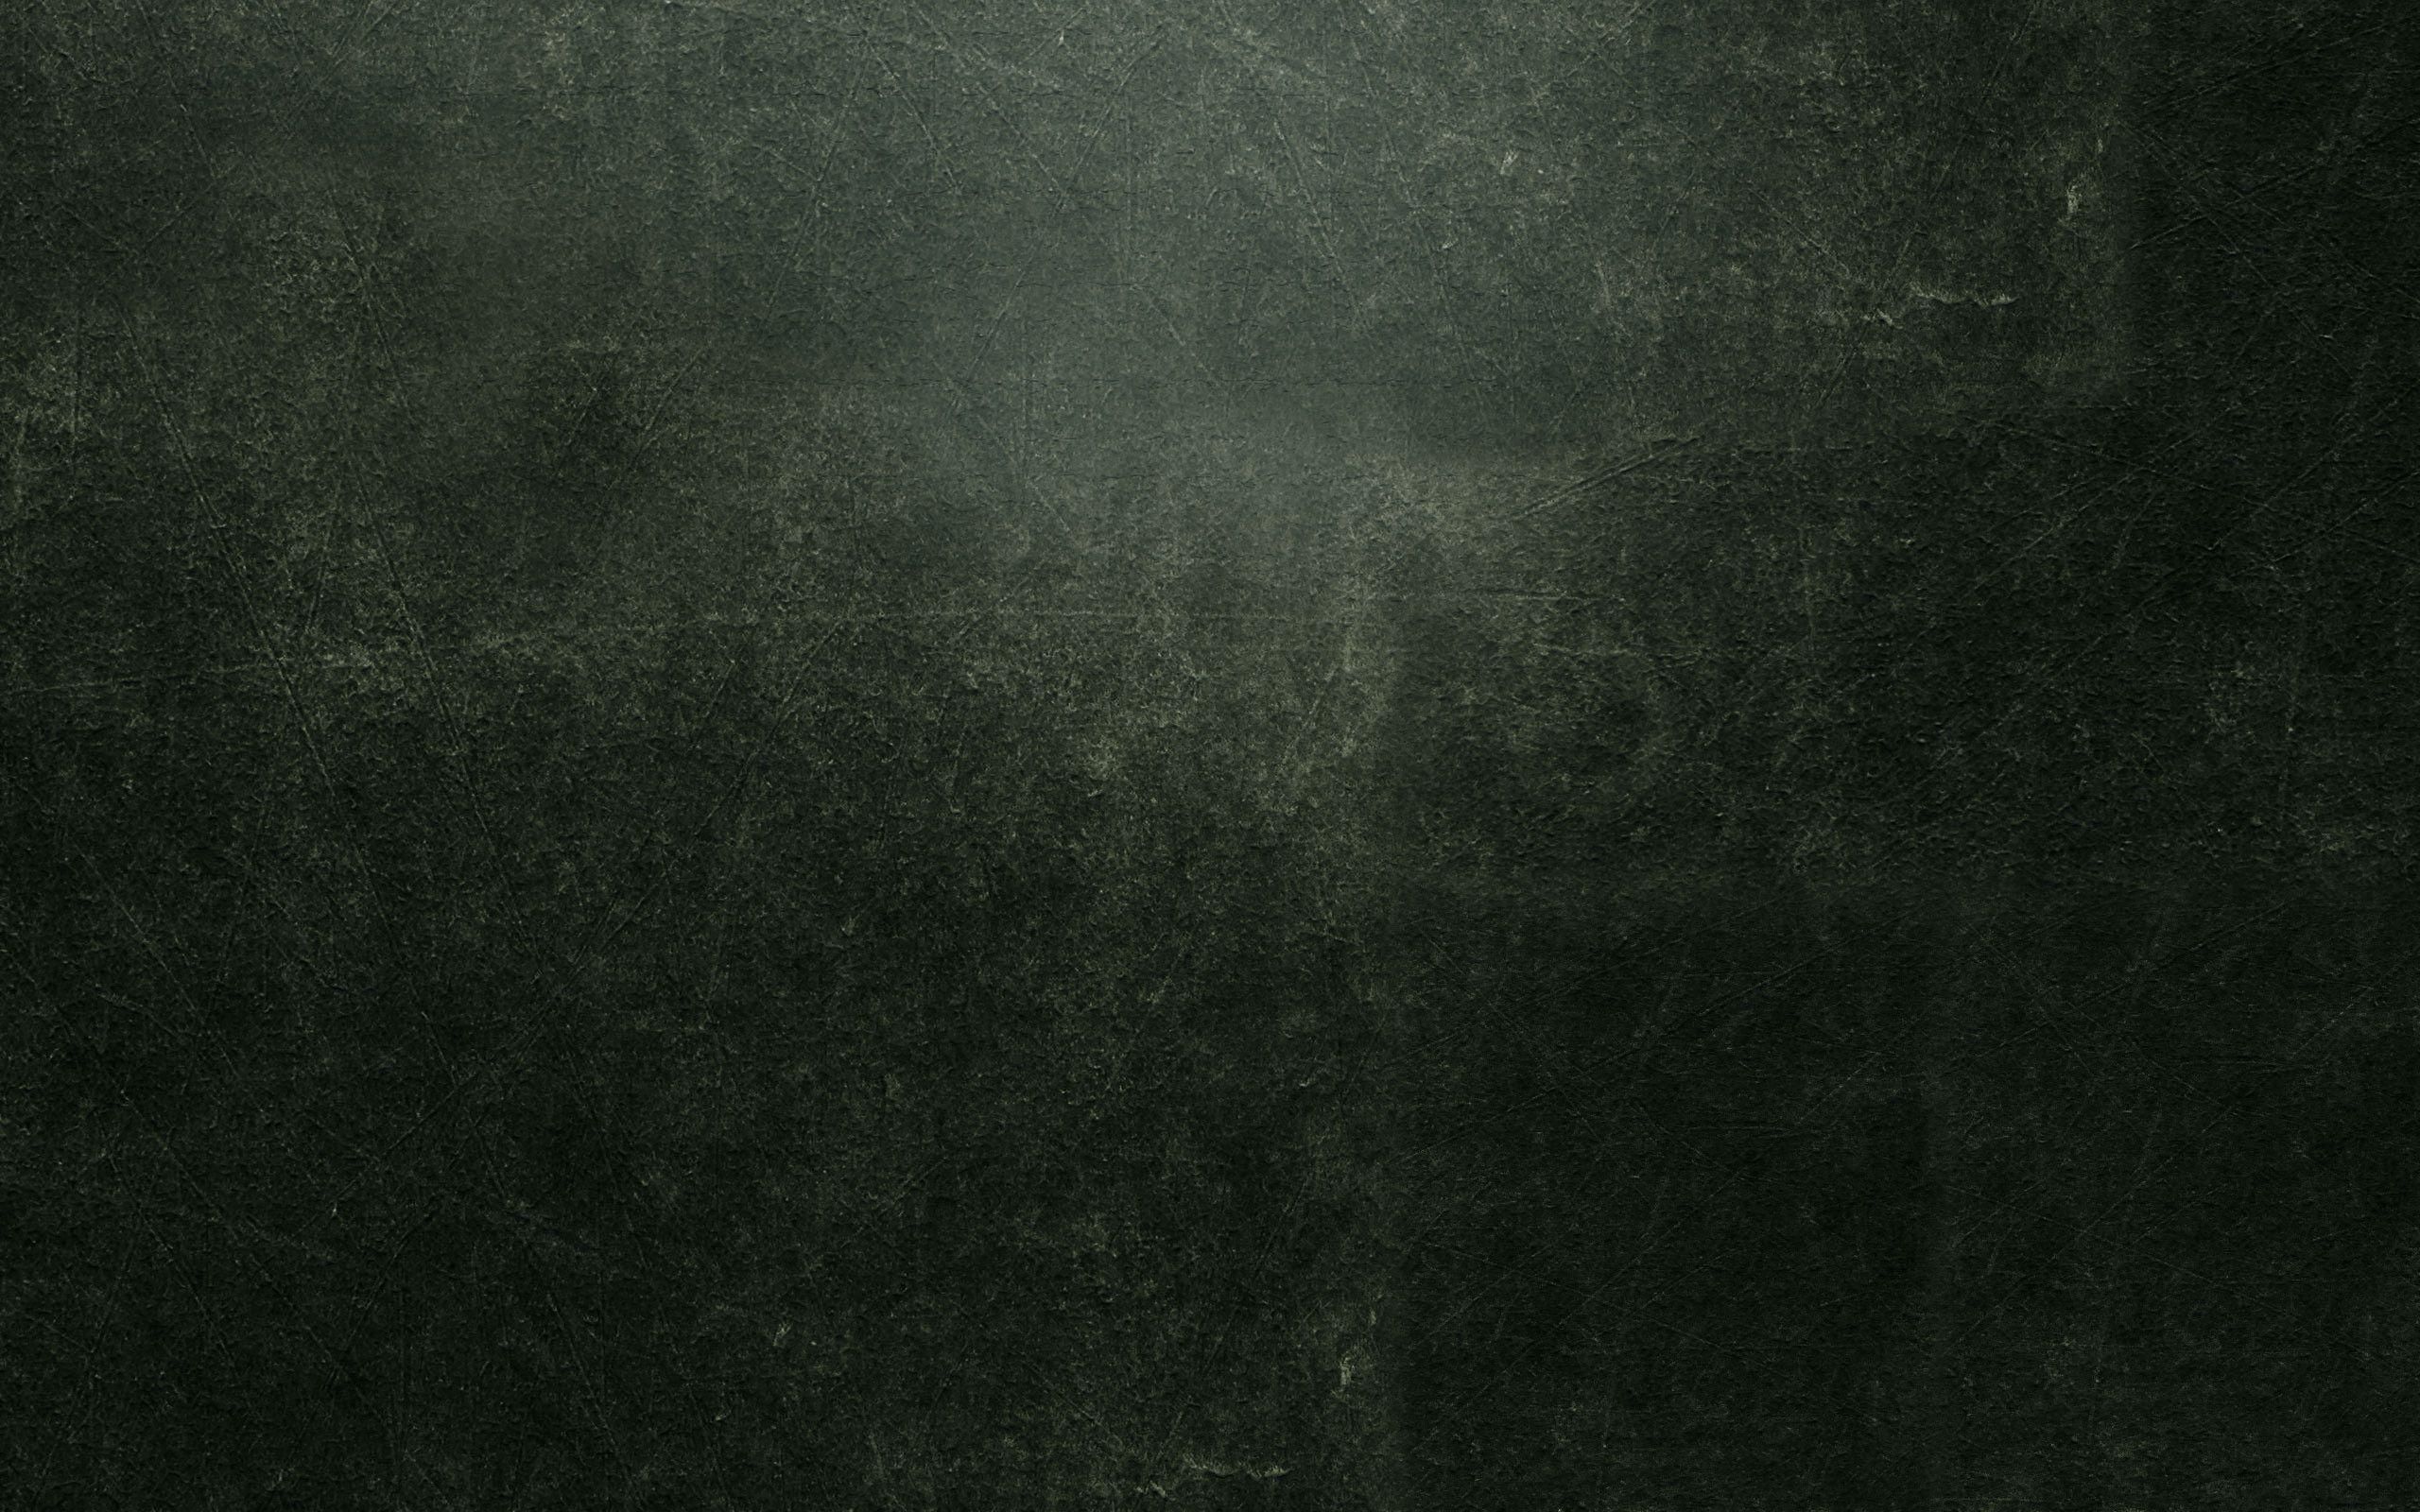 Texture Gray Dark Wallpaper 2560x1600 px Free Download